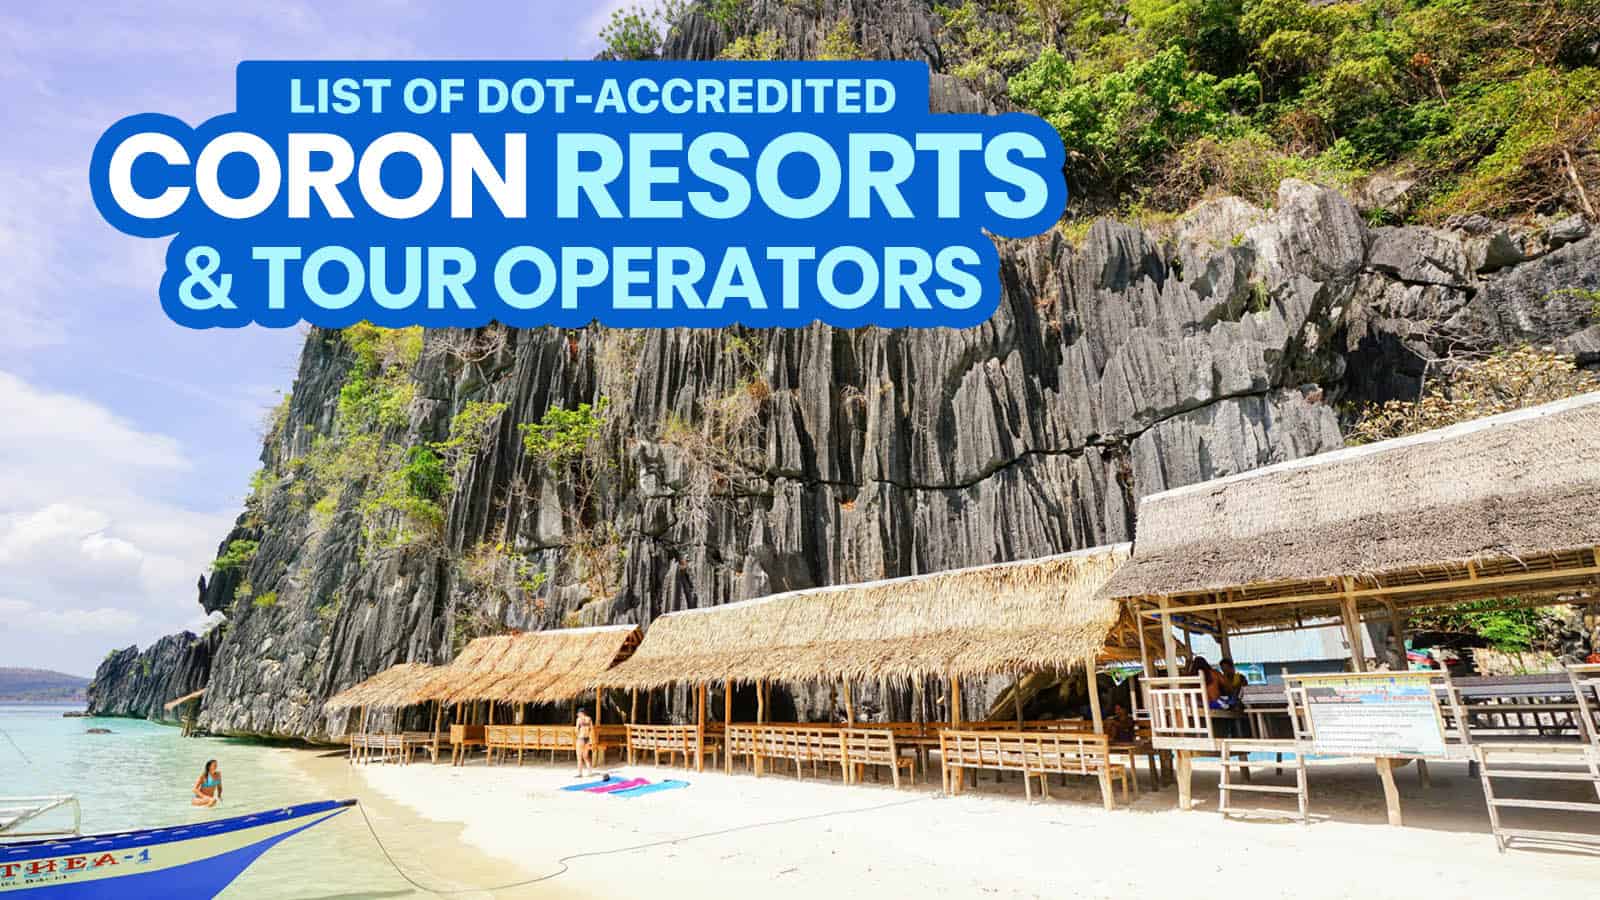 List of DOT-Accredited CORON Resorts, Hotels & Tour Operators